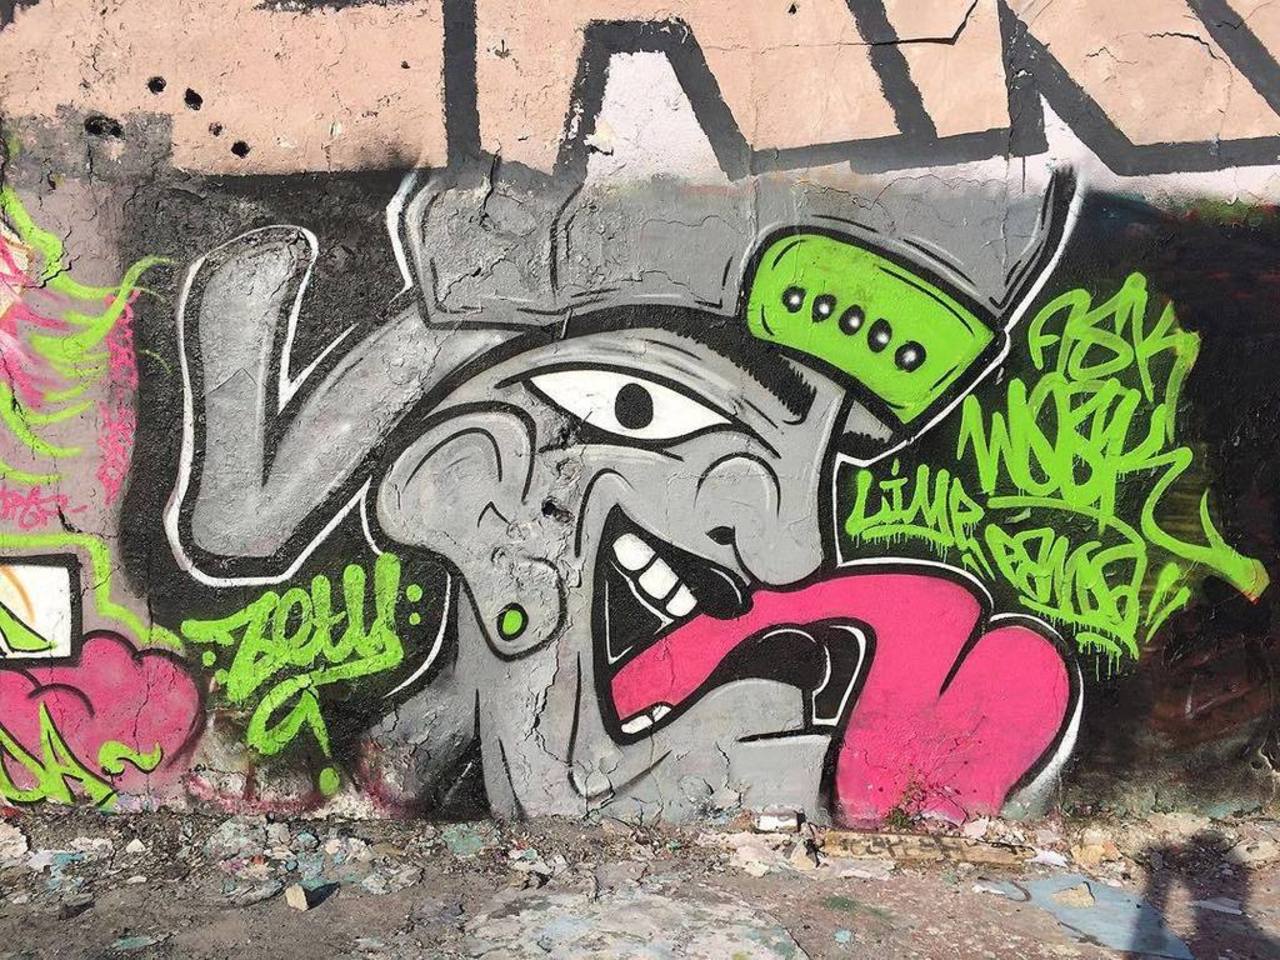 RT @artpushr: via #iphonistaz "http://ift.tt/1QLlVn5" #graffiti #streetart http://t.co/9by7Ucjsor